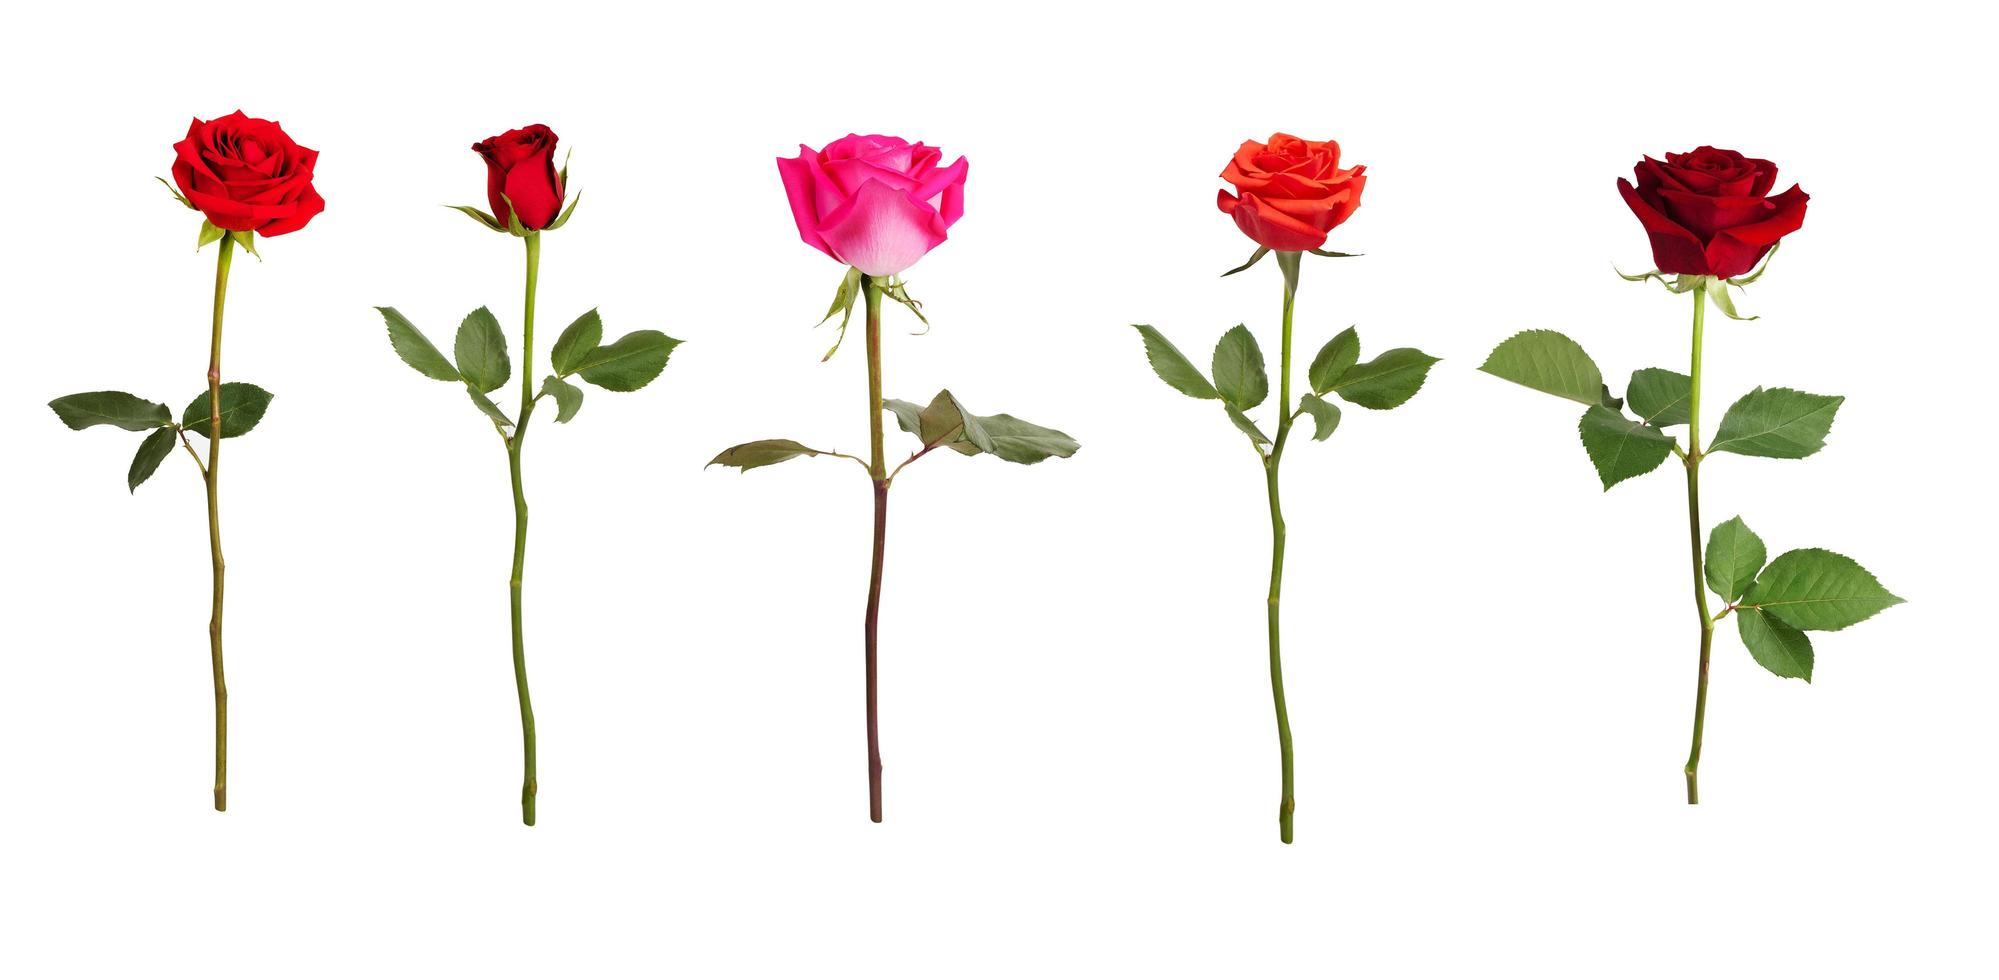 cinco rosas de cores diferentes foto